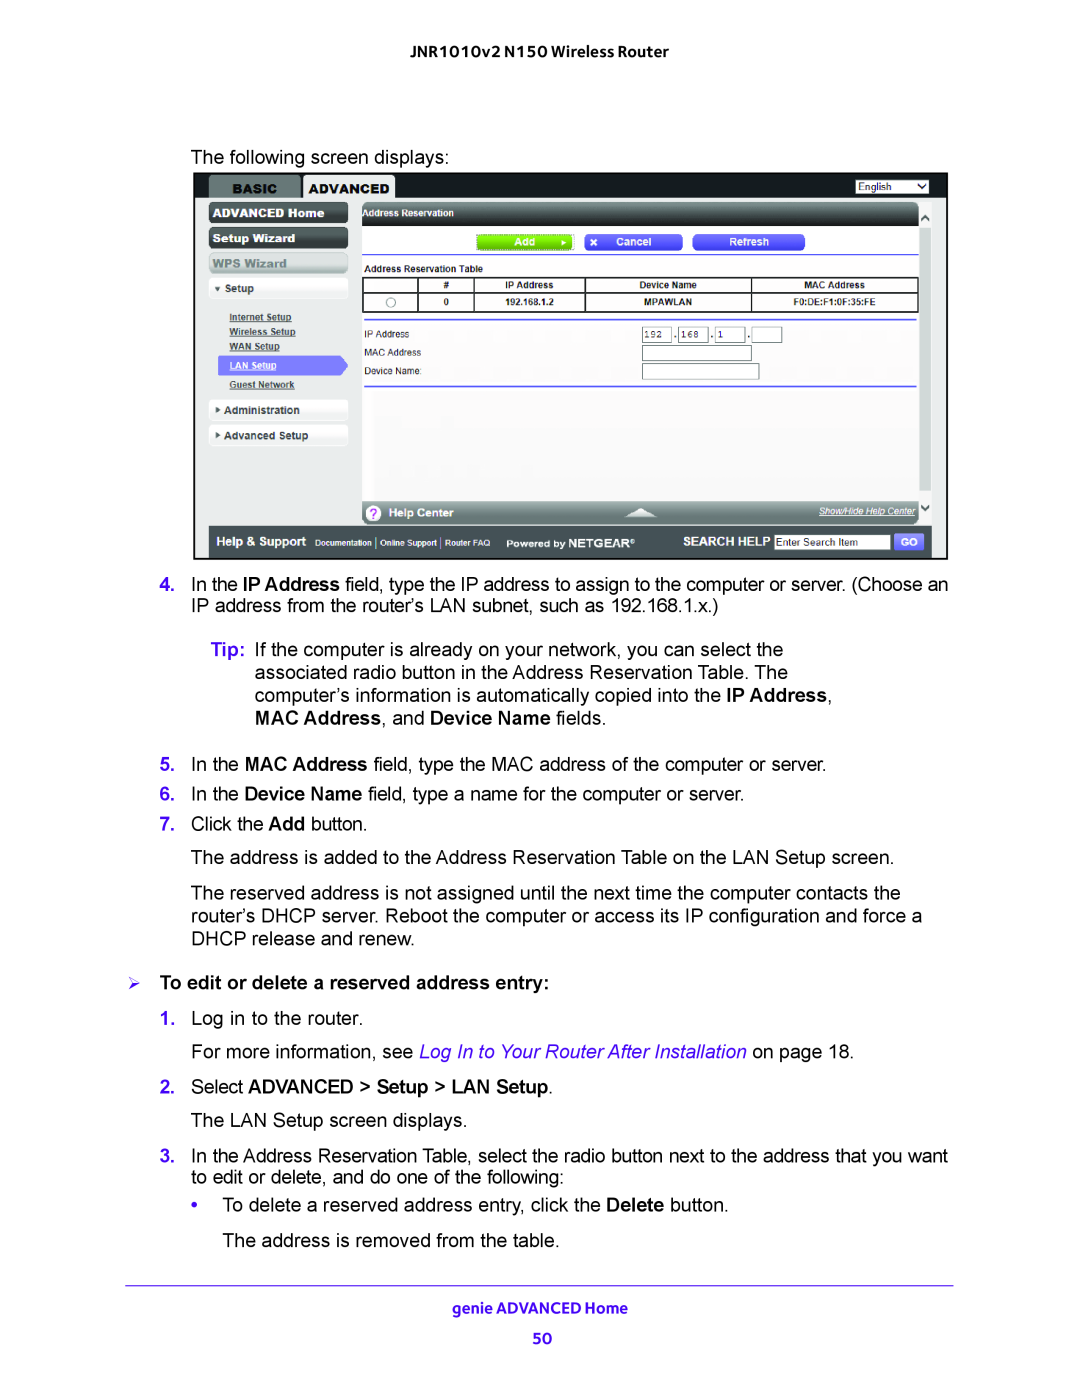 NETGEAR JNR1010V2 user manual  To edit or delete a reserved address entry 